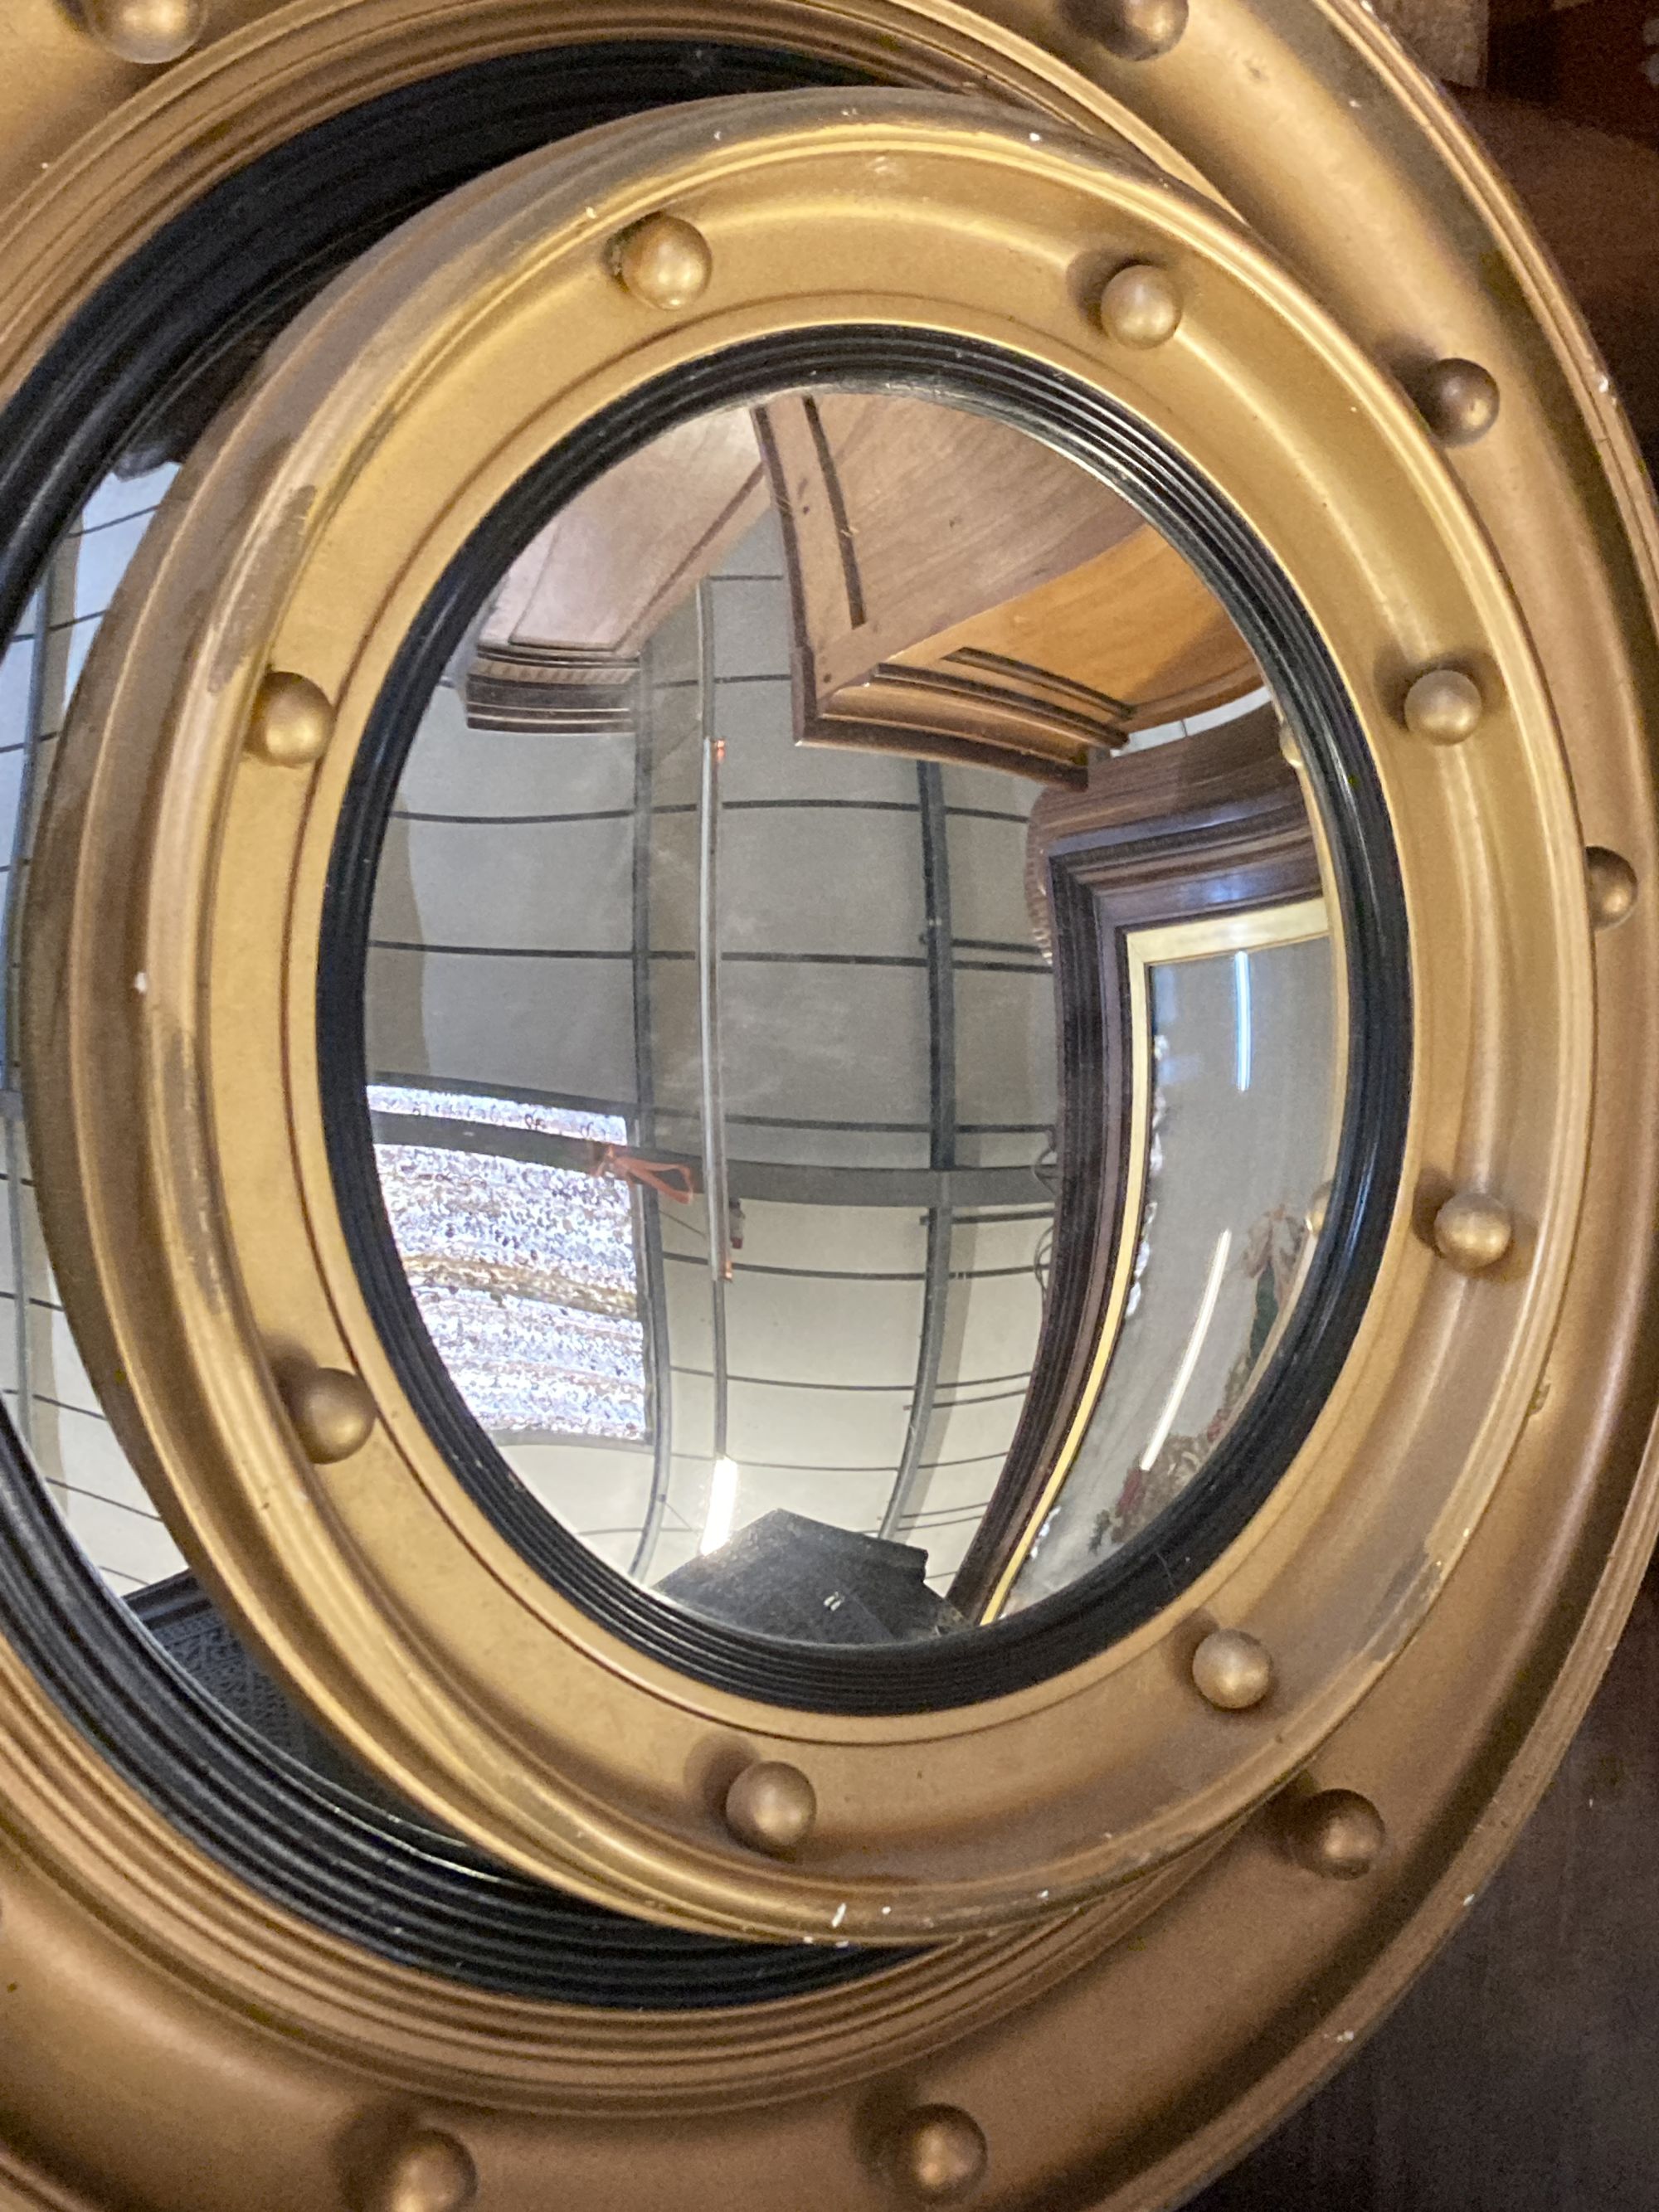 Five gilt and brass framed circular convex wall mirrors, largest 50cm diameter